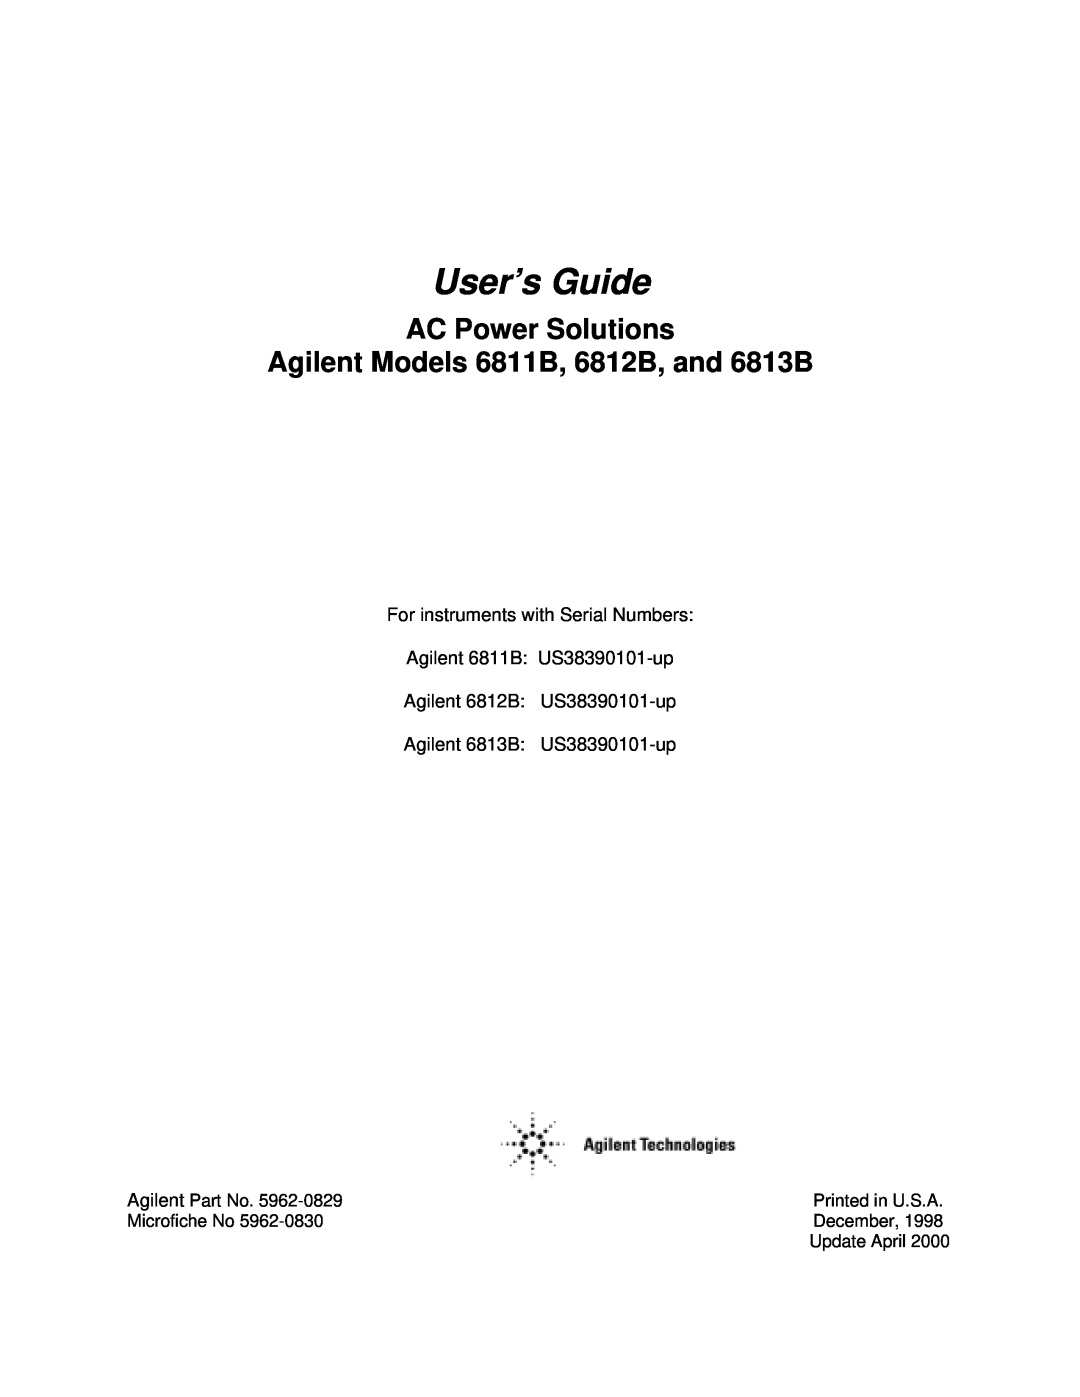 Agilent Technologies service manual to the Agilent Model 6813B, VA Output Capability Option, Addendum, Agilent P/N, May 